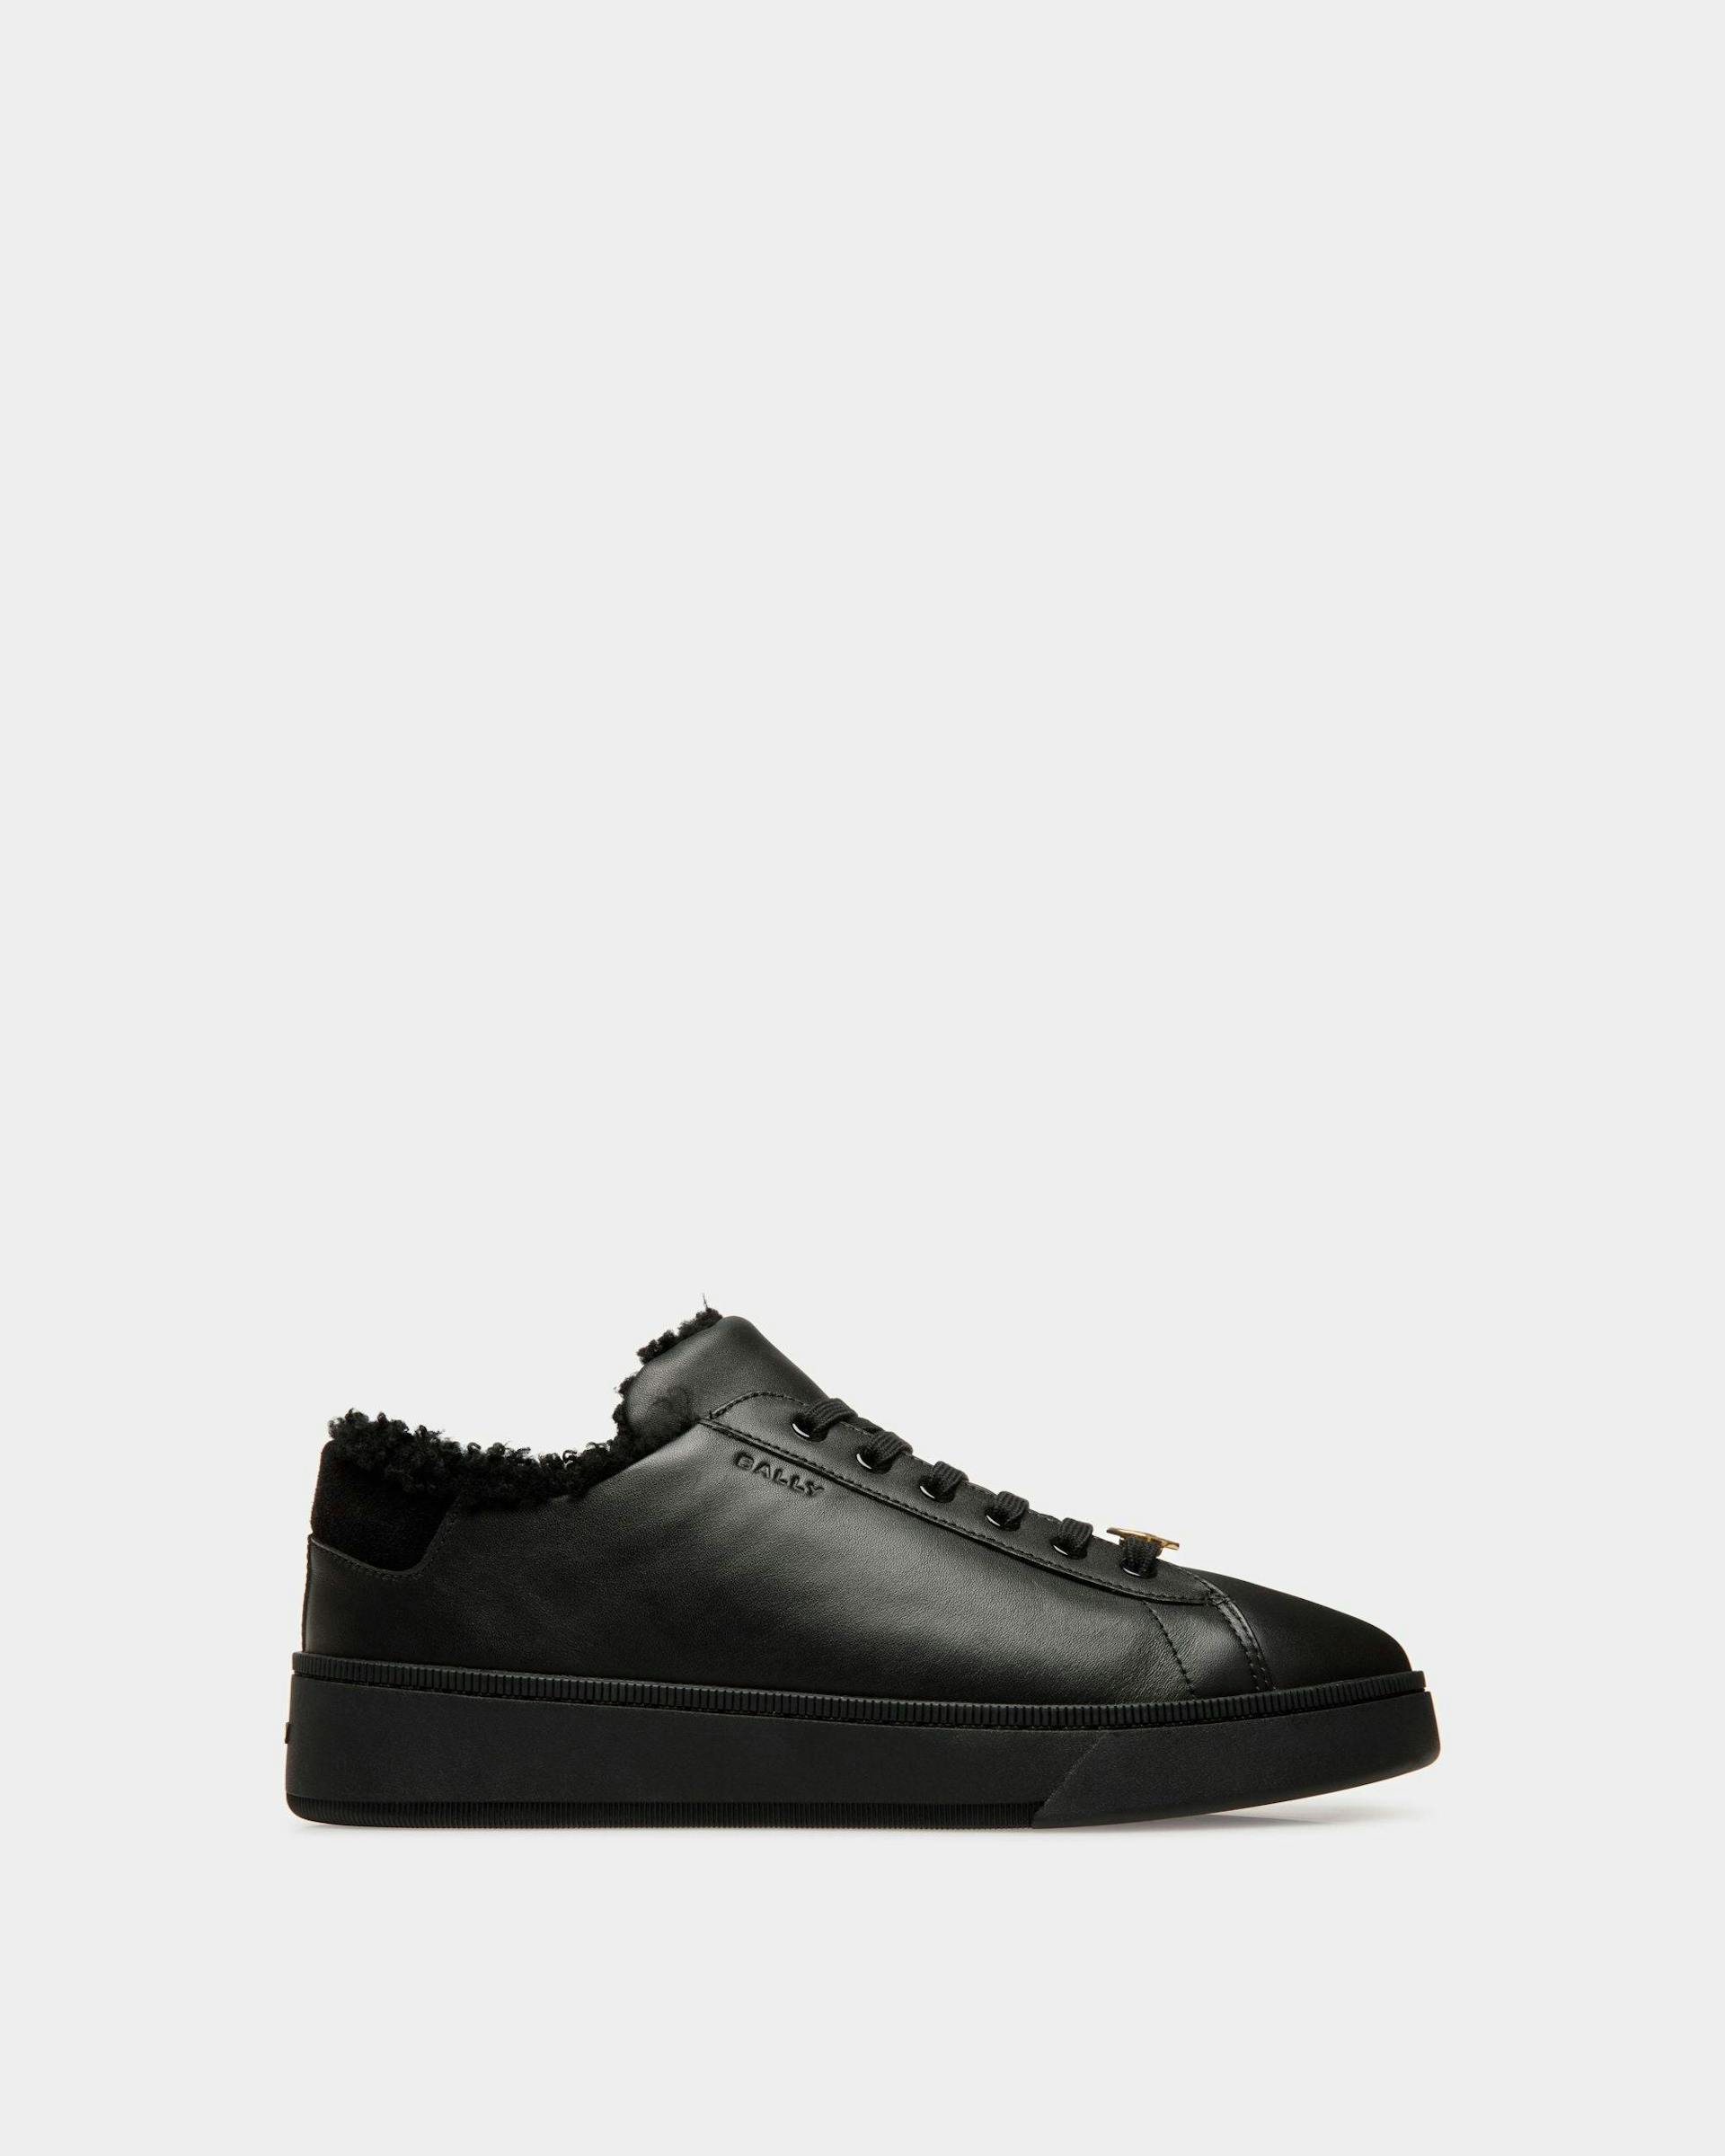 Raise Sneakers In Black Leather - Men's - Bally - 01